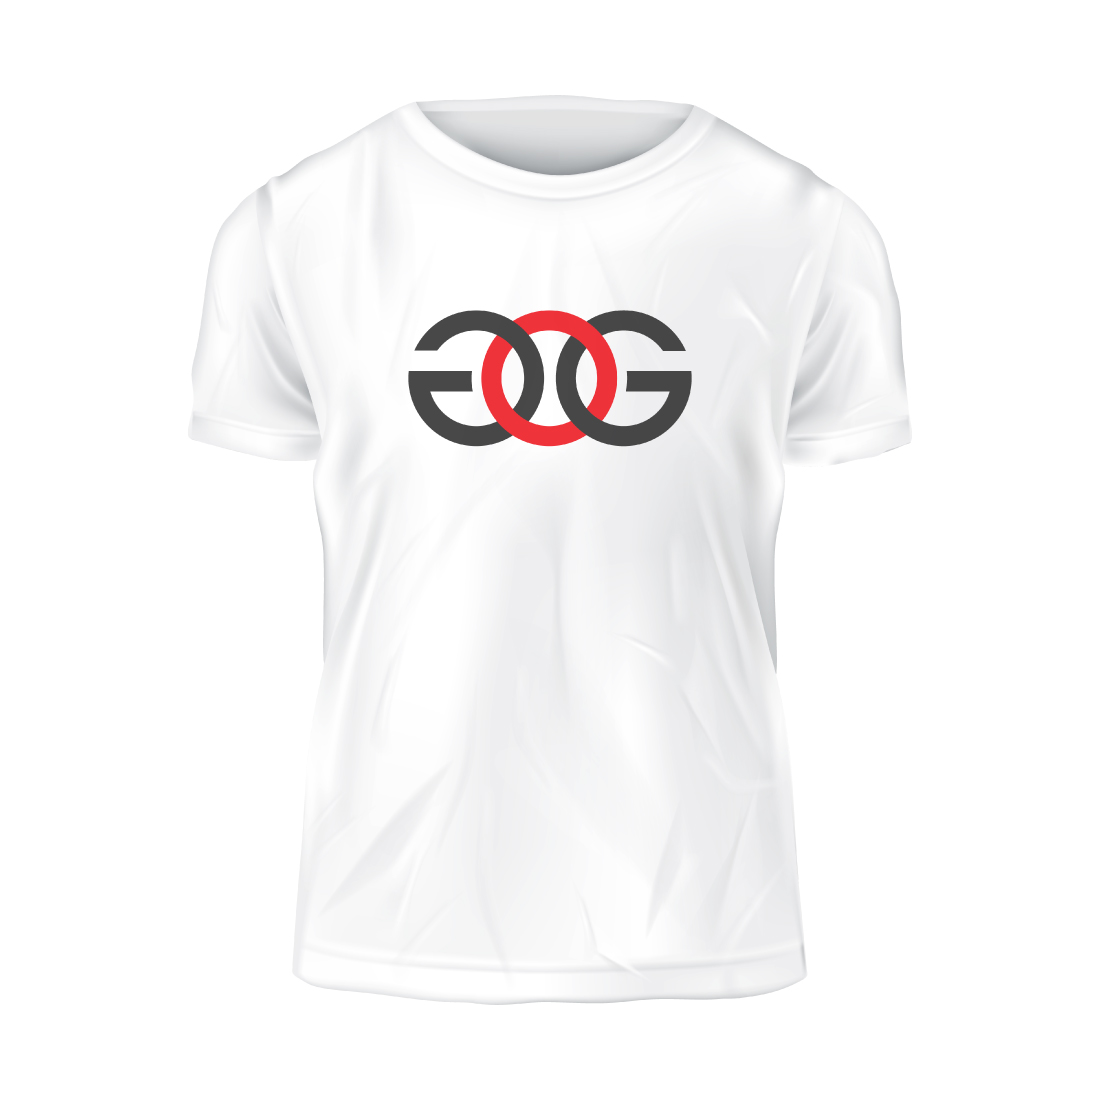 GOG logo design and T-shirt preview image.